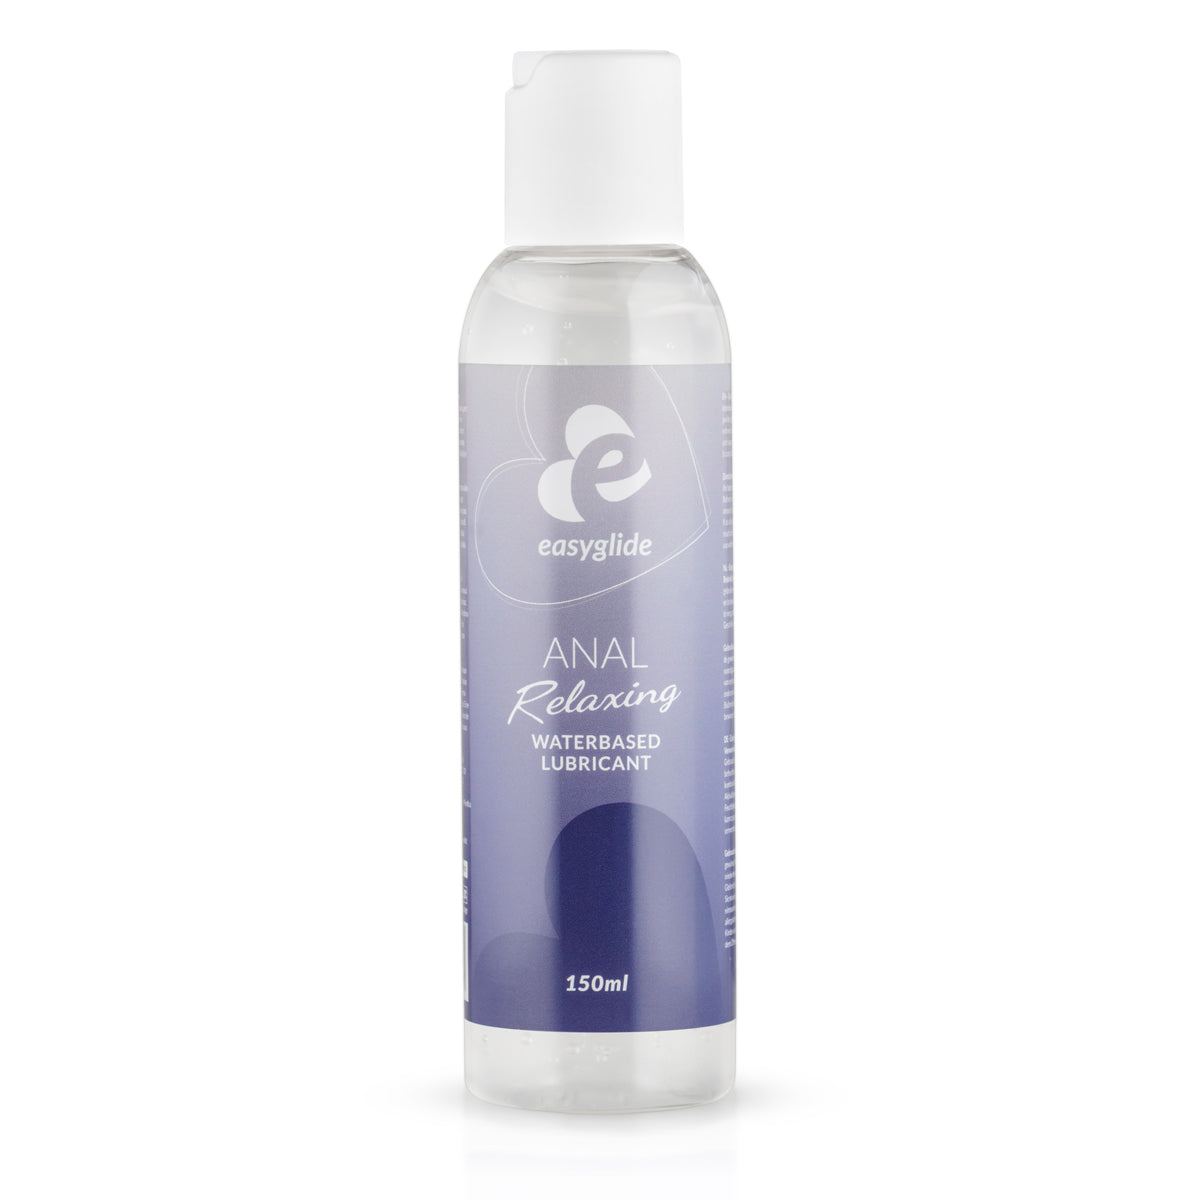 EasyGlide | Anal Relaxing Water Based Lubricant - 150ml